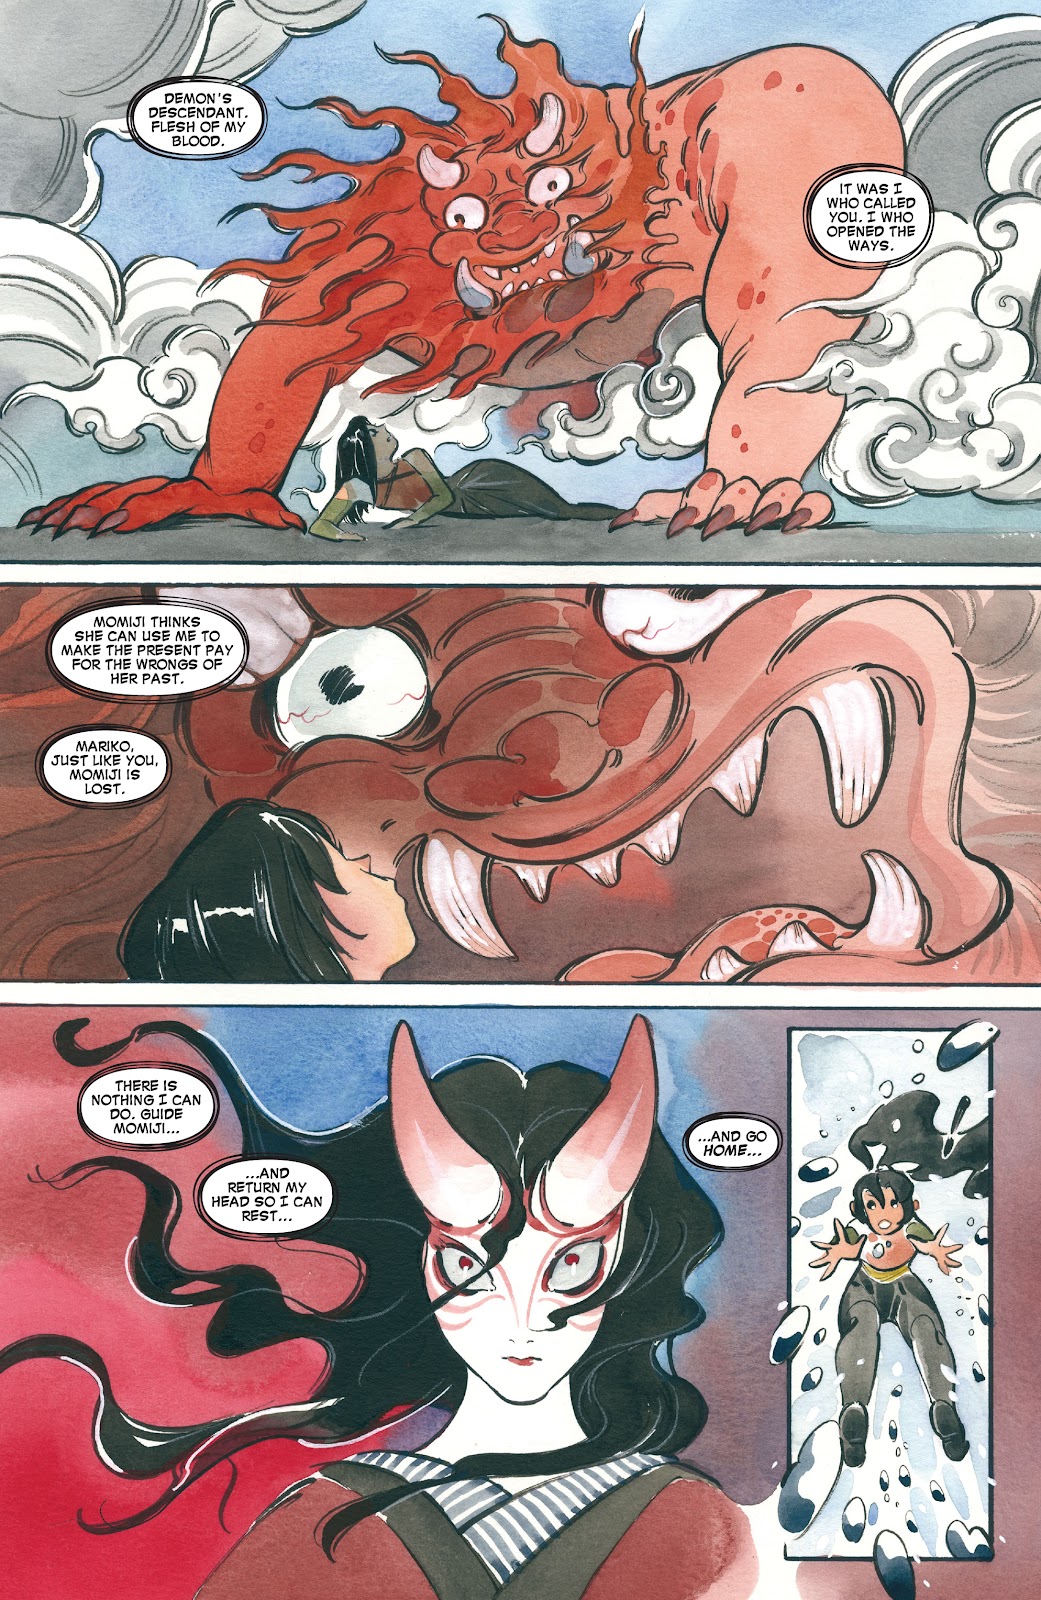 Demon Wars: Scarlet Sin issue 1 - Page 19